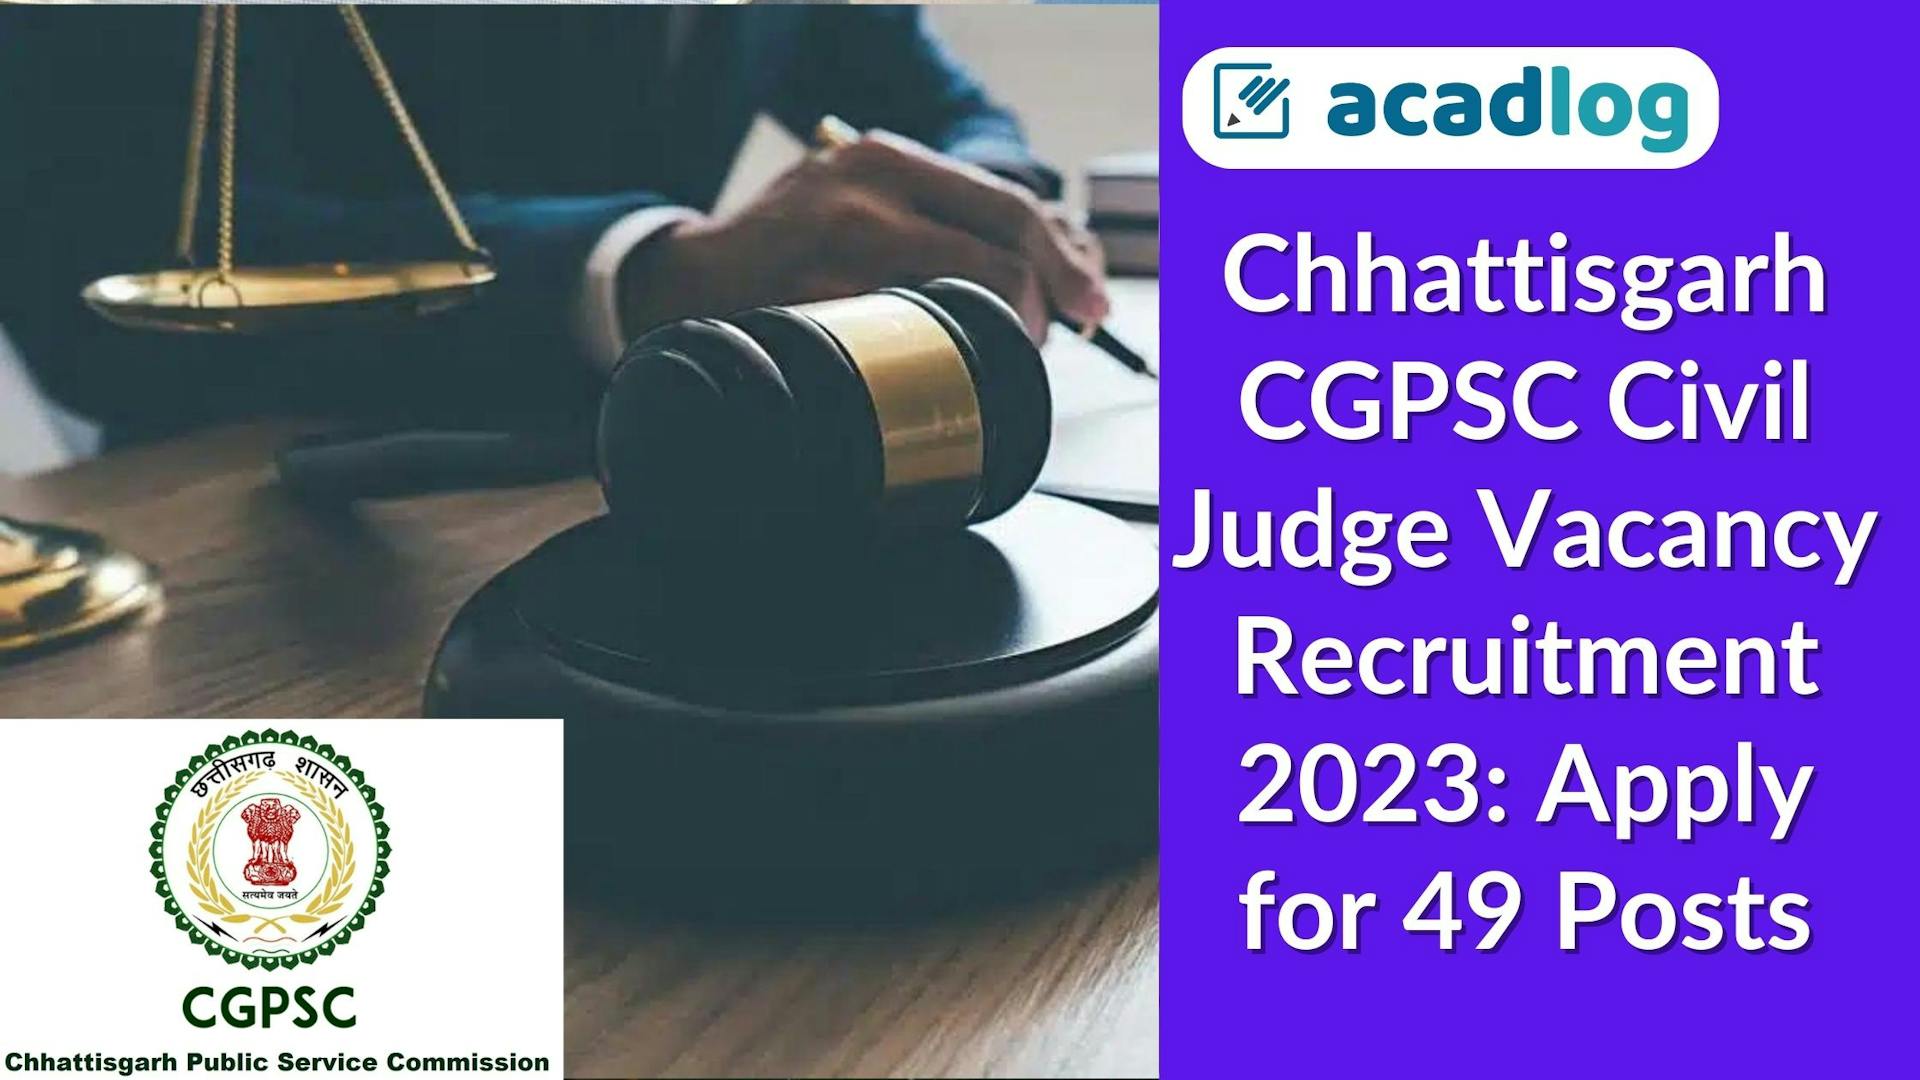 CG Govt Jobs: Recruitment For Chhattisgarh Civil Judge Vacancy 2023